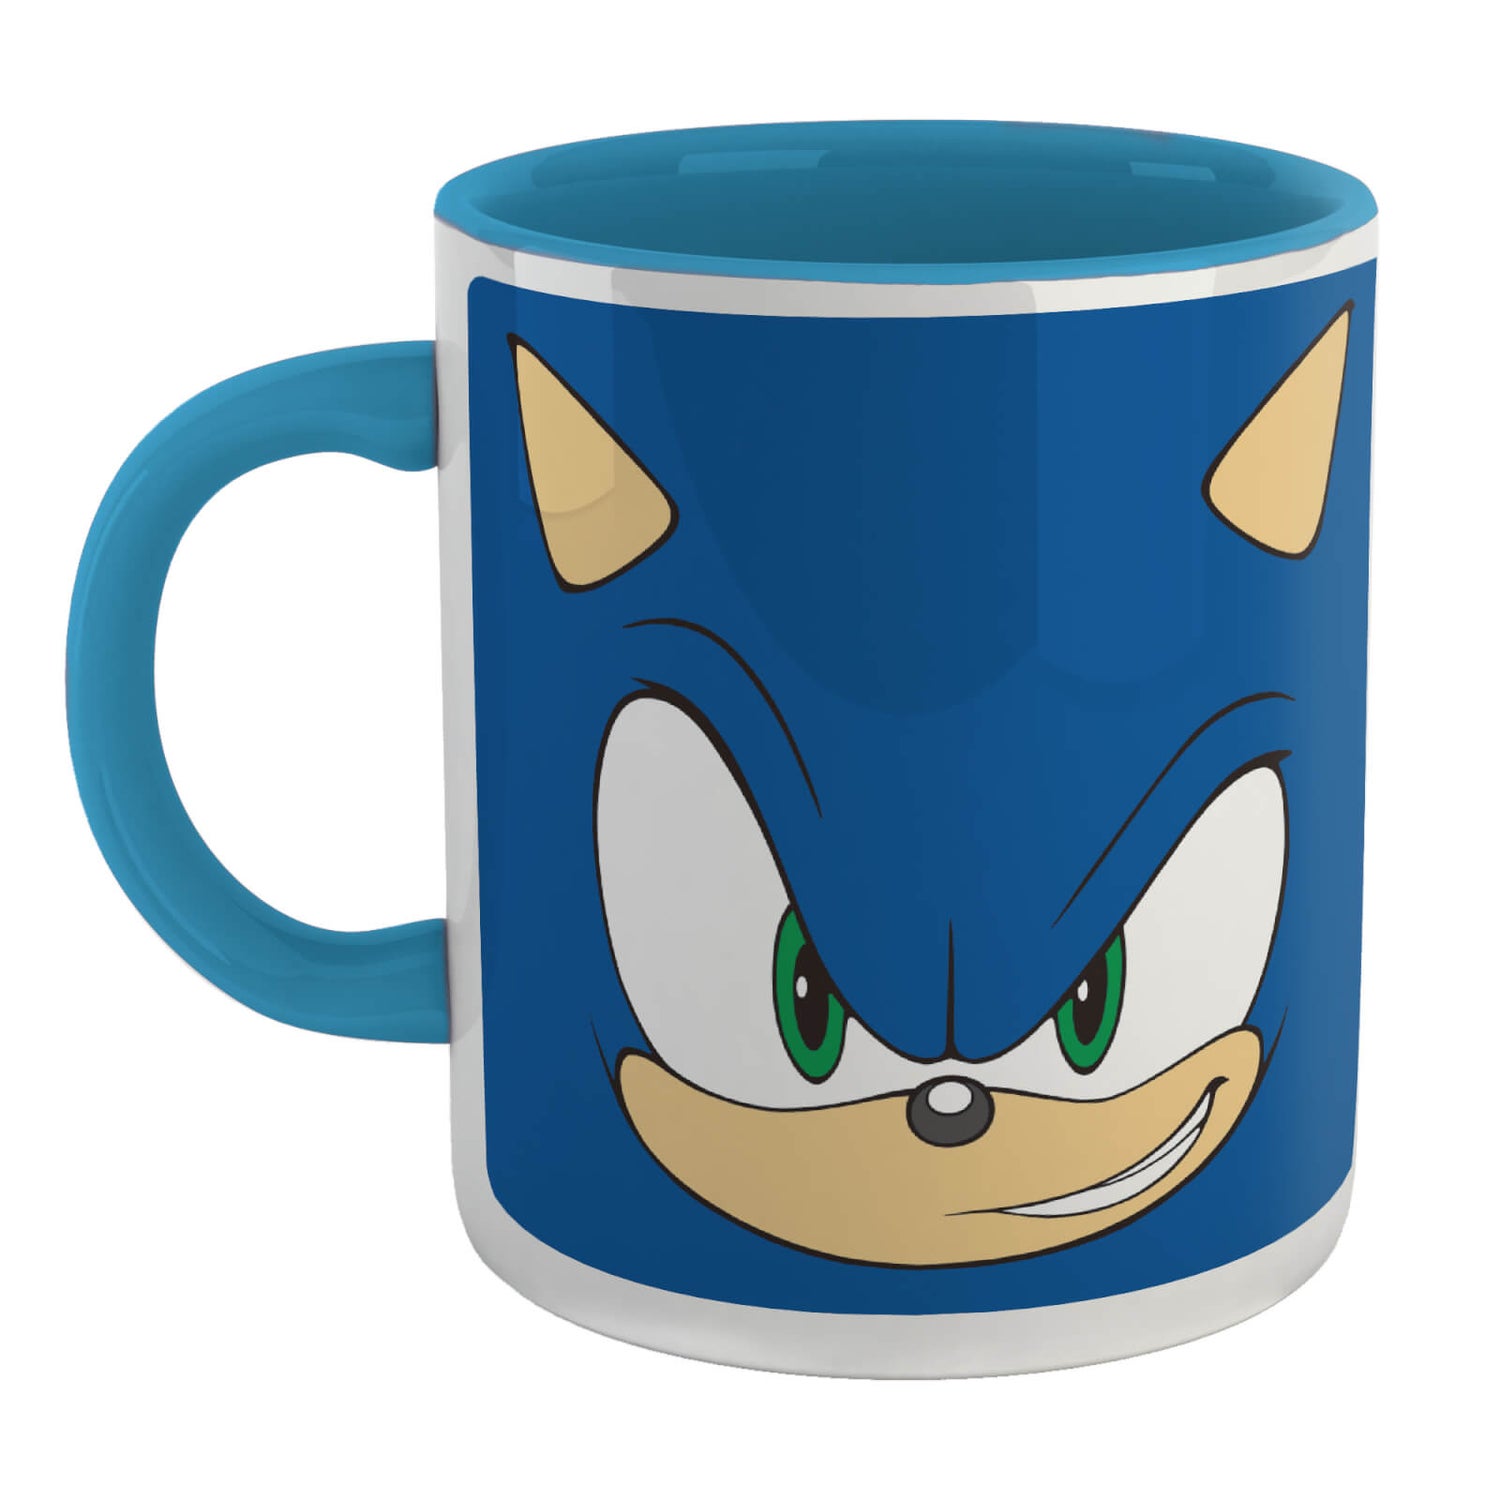 Derpy Sonic Sernic Hadgehorg Coffee Mugs